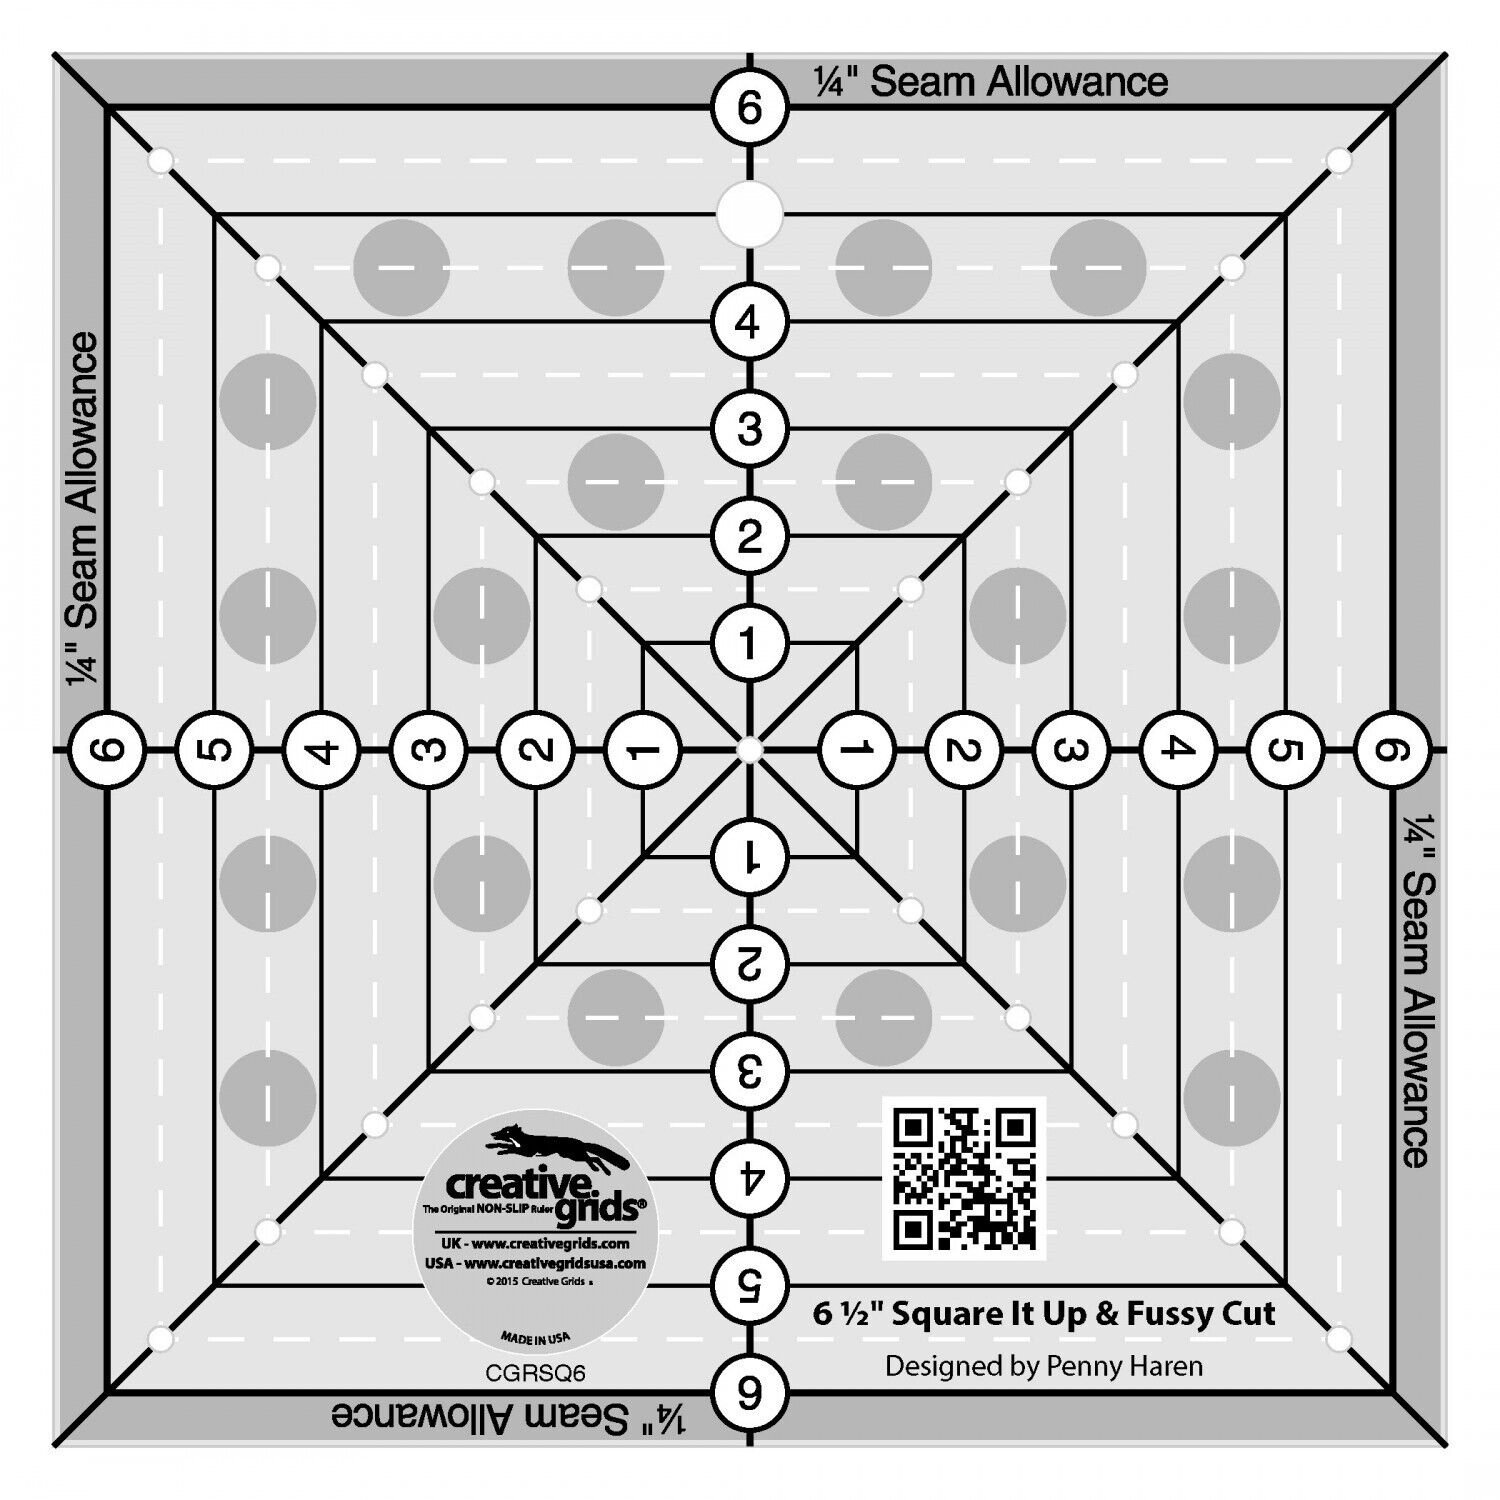 Creative Grids 6-1/2" Square It Up & Fussy Cut Ruler - #CGRSQ6